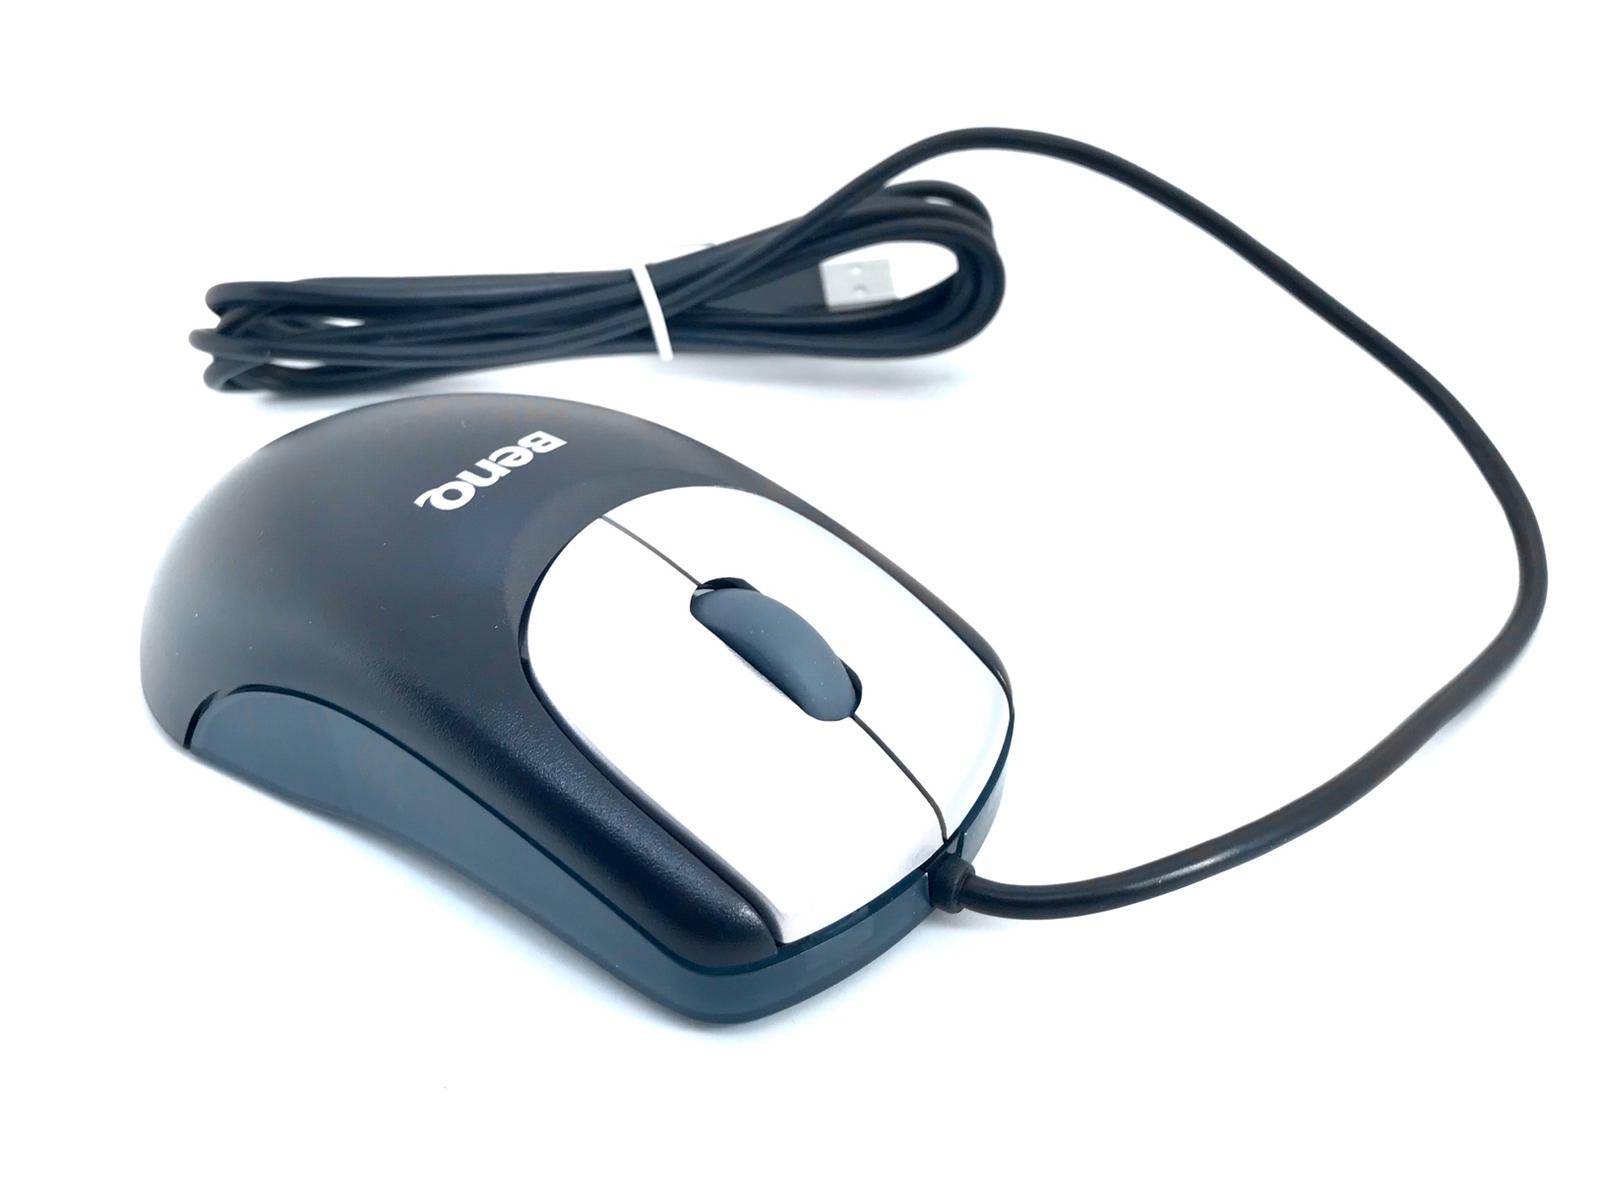 BenQ M106 USB Mouse